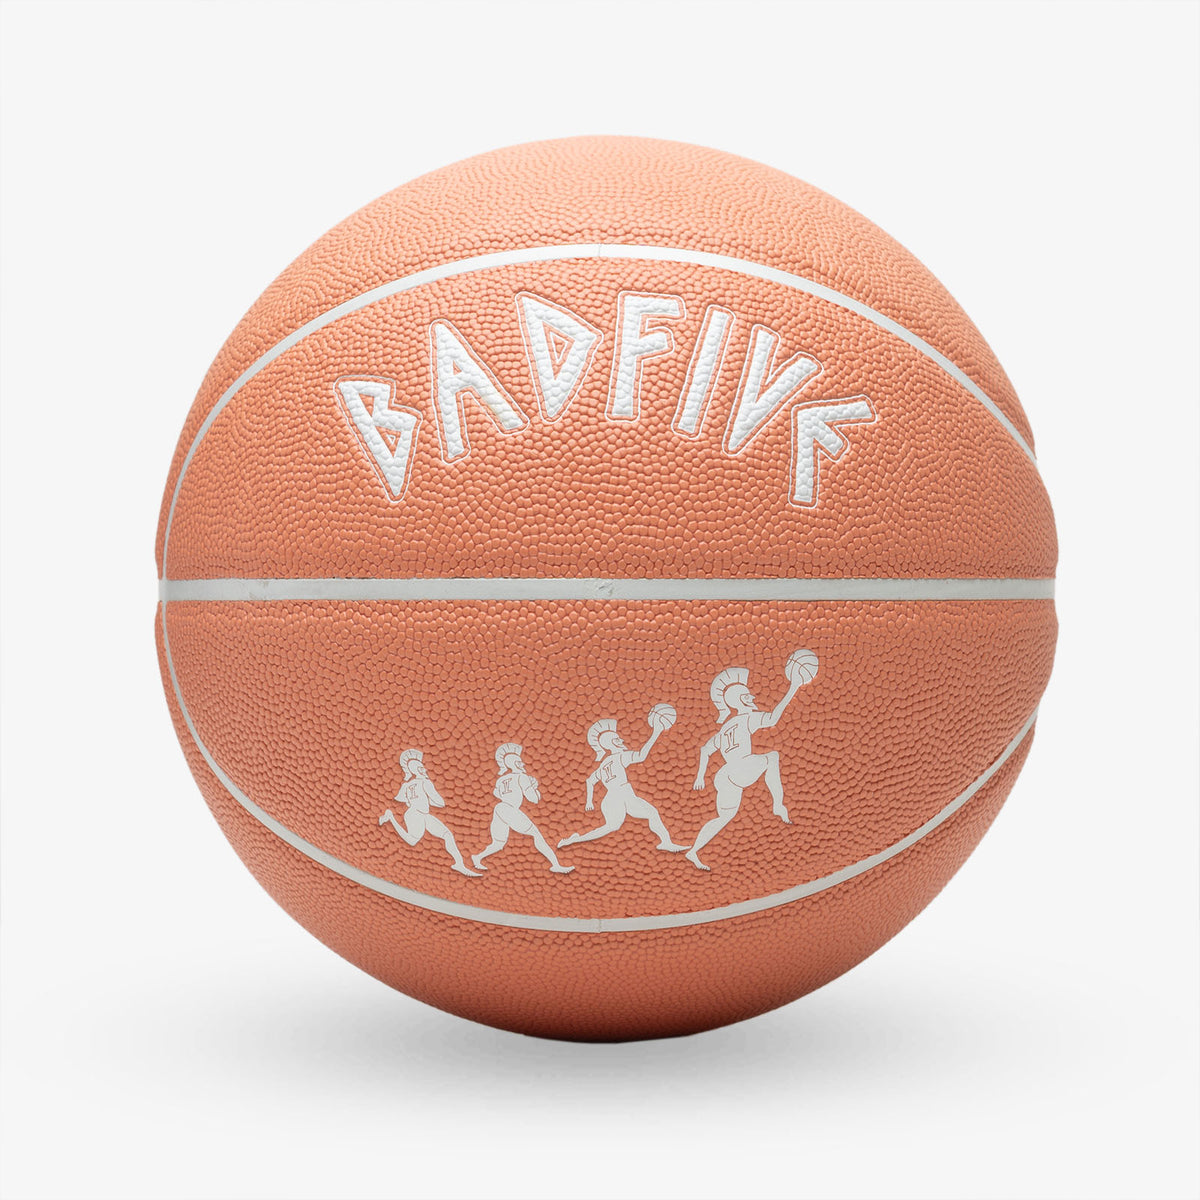 Li-Ning Elite BadFive Basketball -Size 7